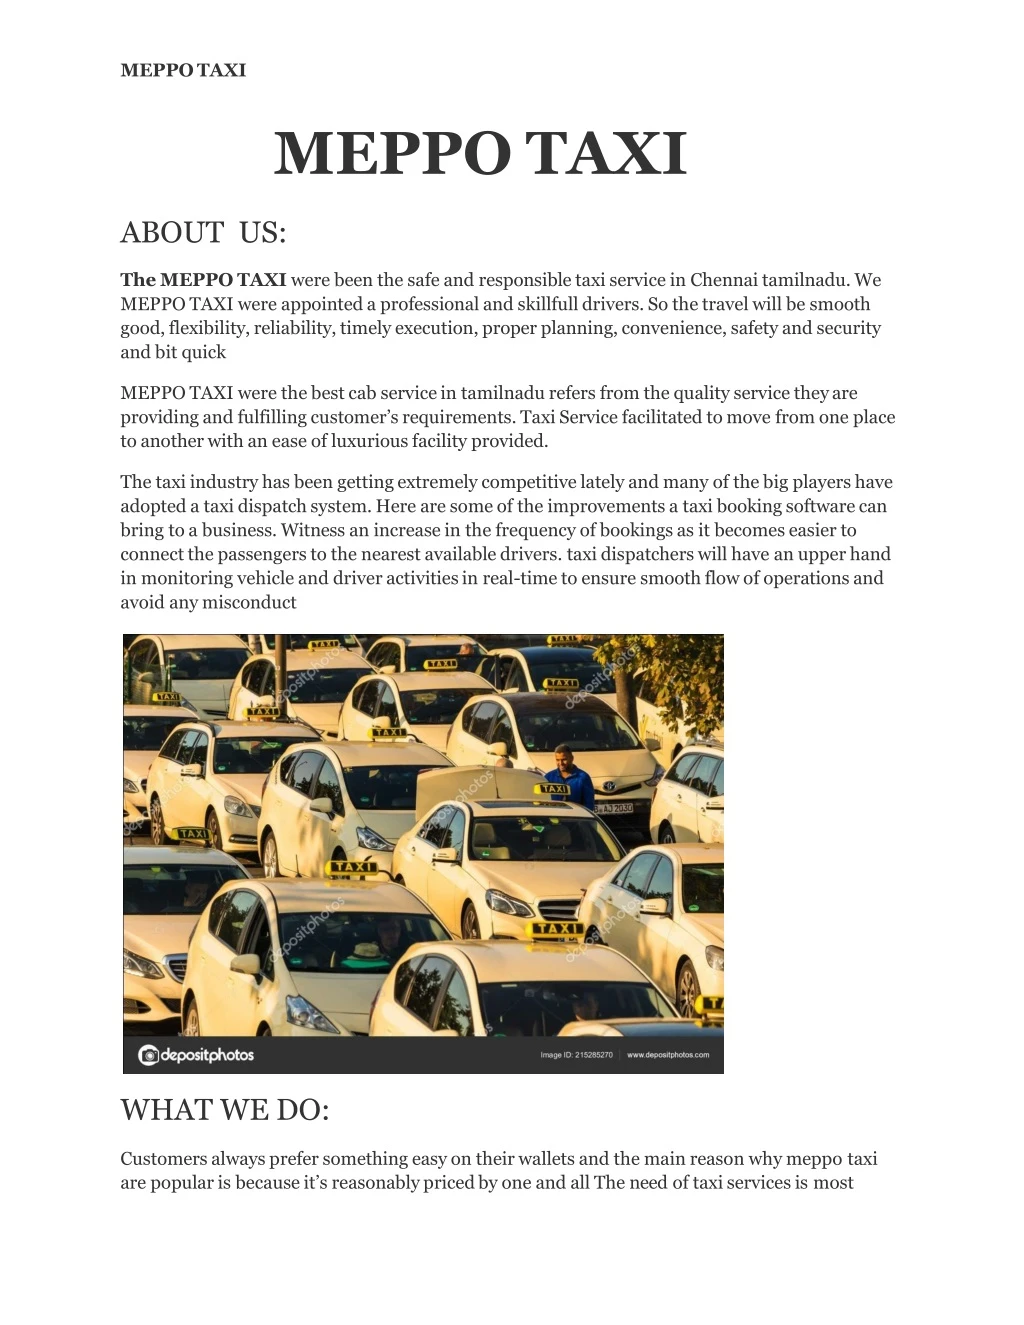 meppo taxi